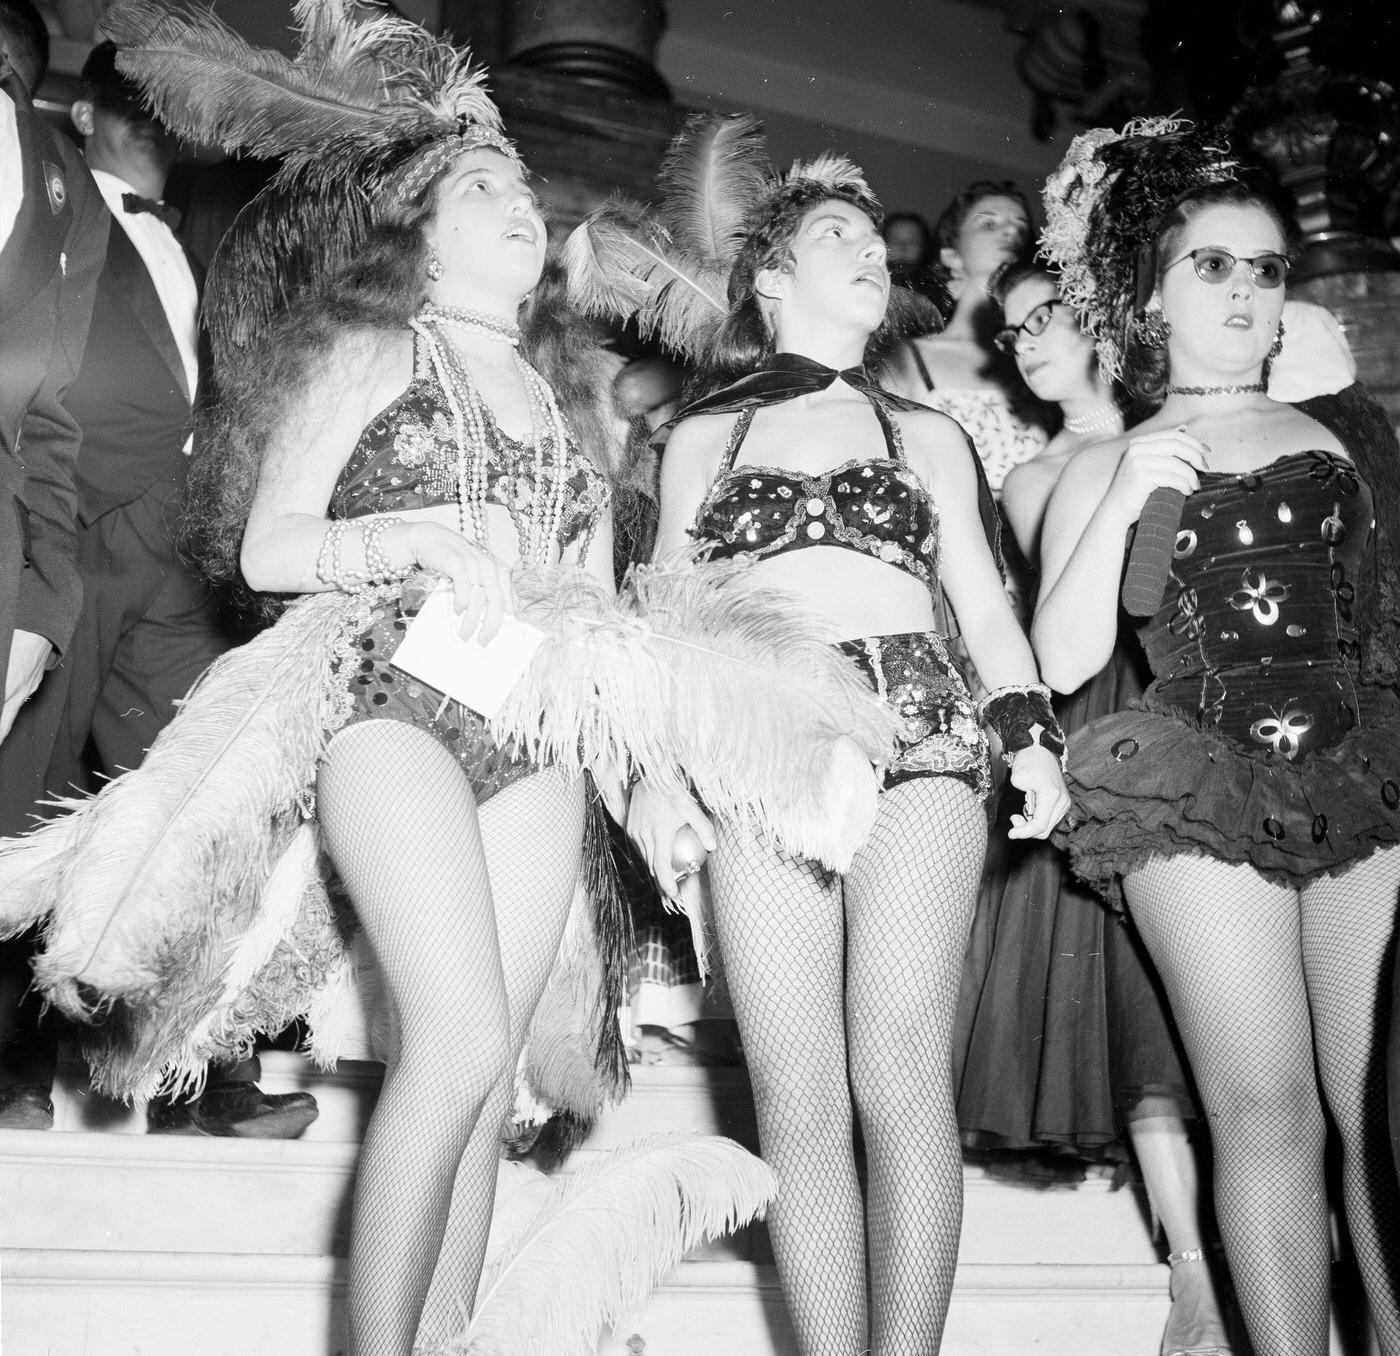 Costumed Partygoers Dancing, Rio Carnival 1953